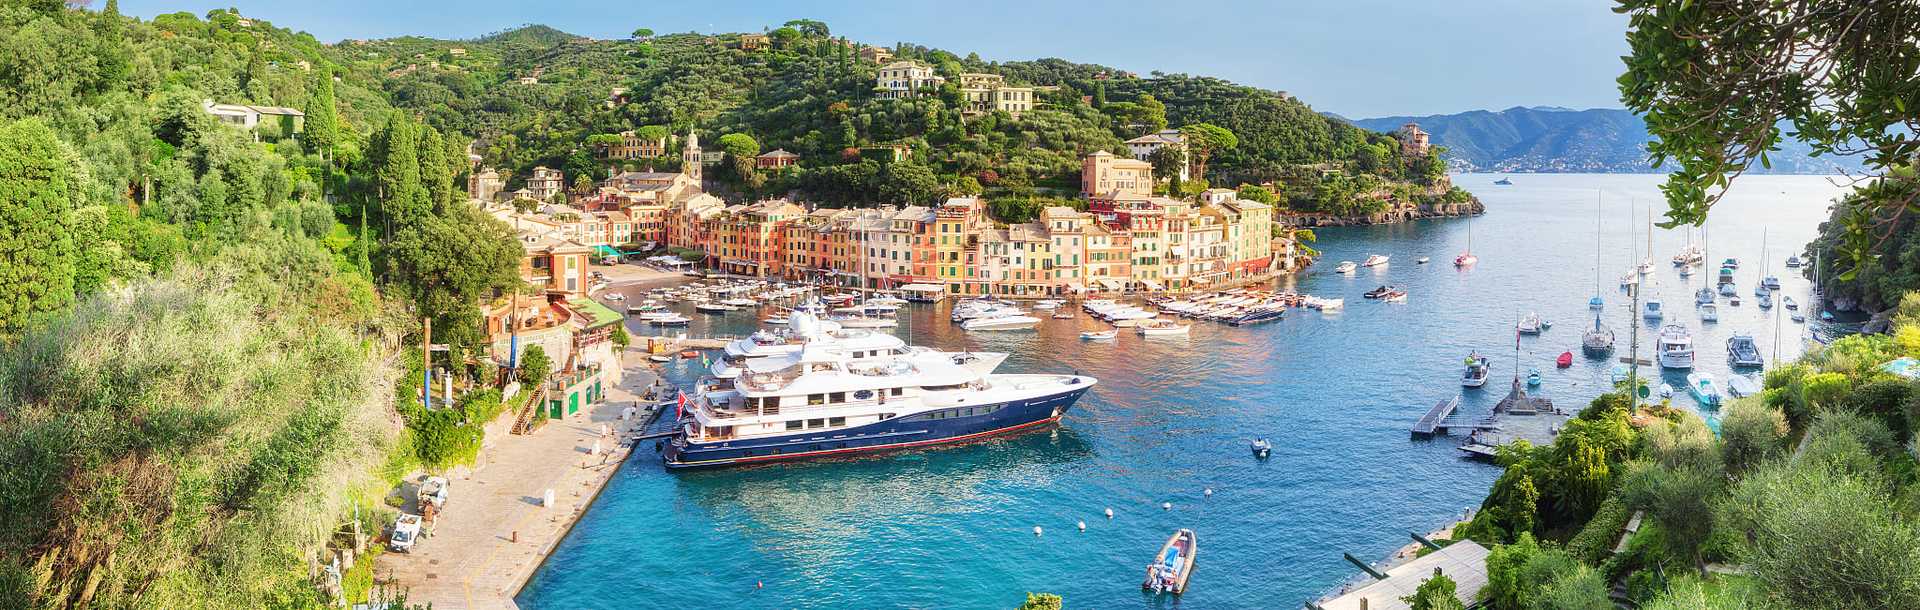 Luxury village of Portofino with yachts on the Italian Riviera